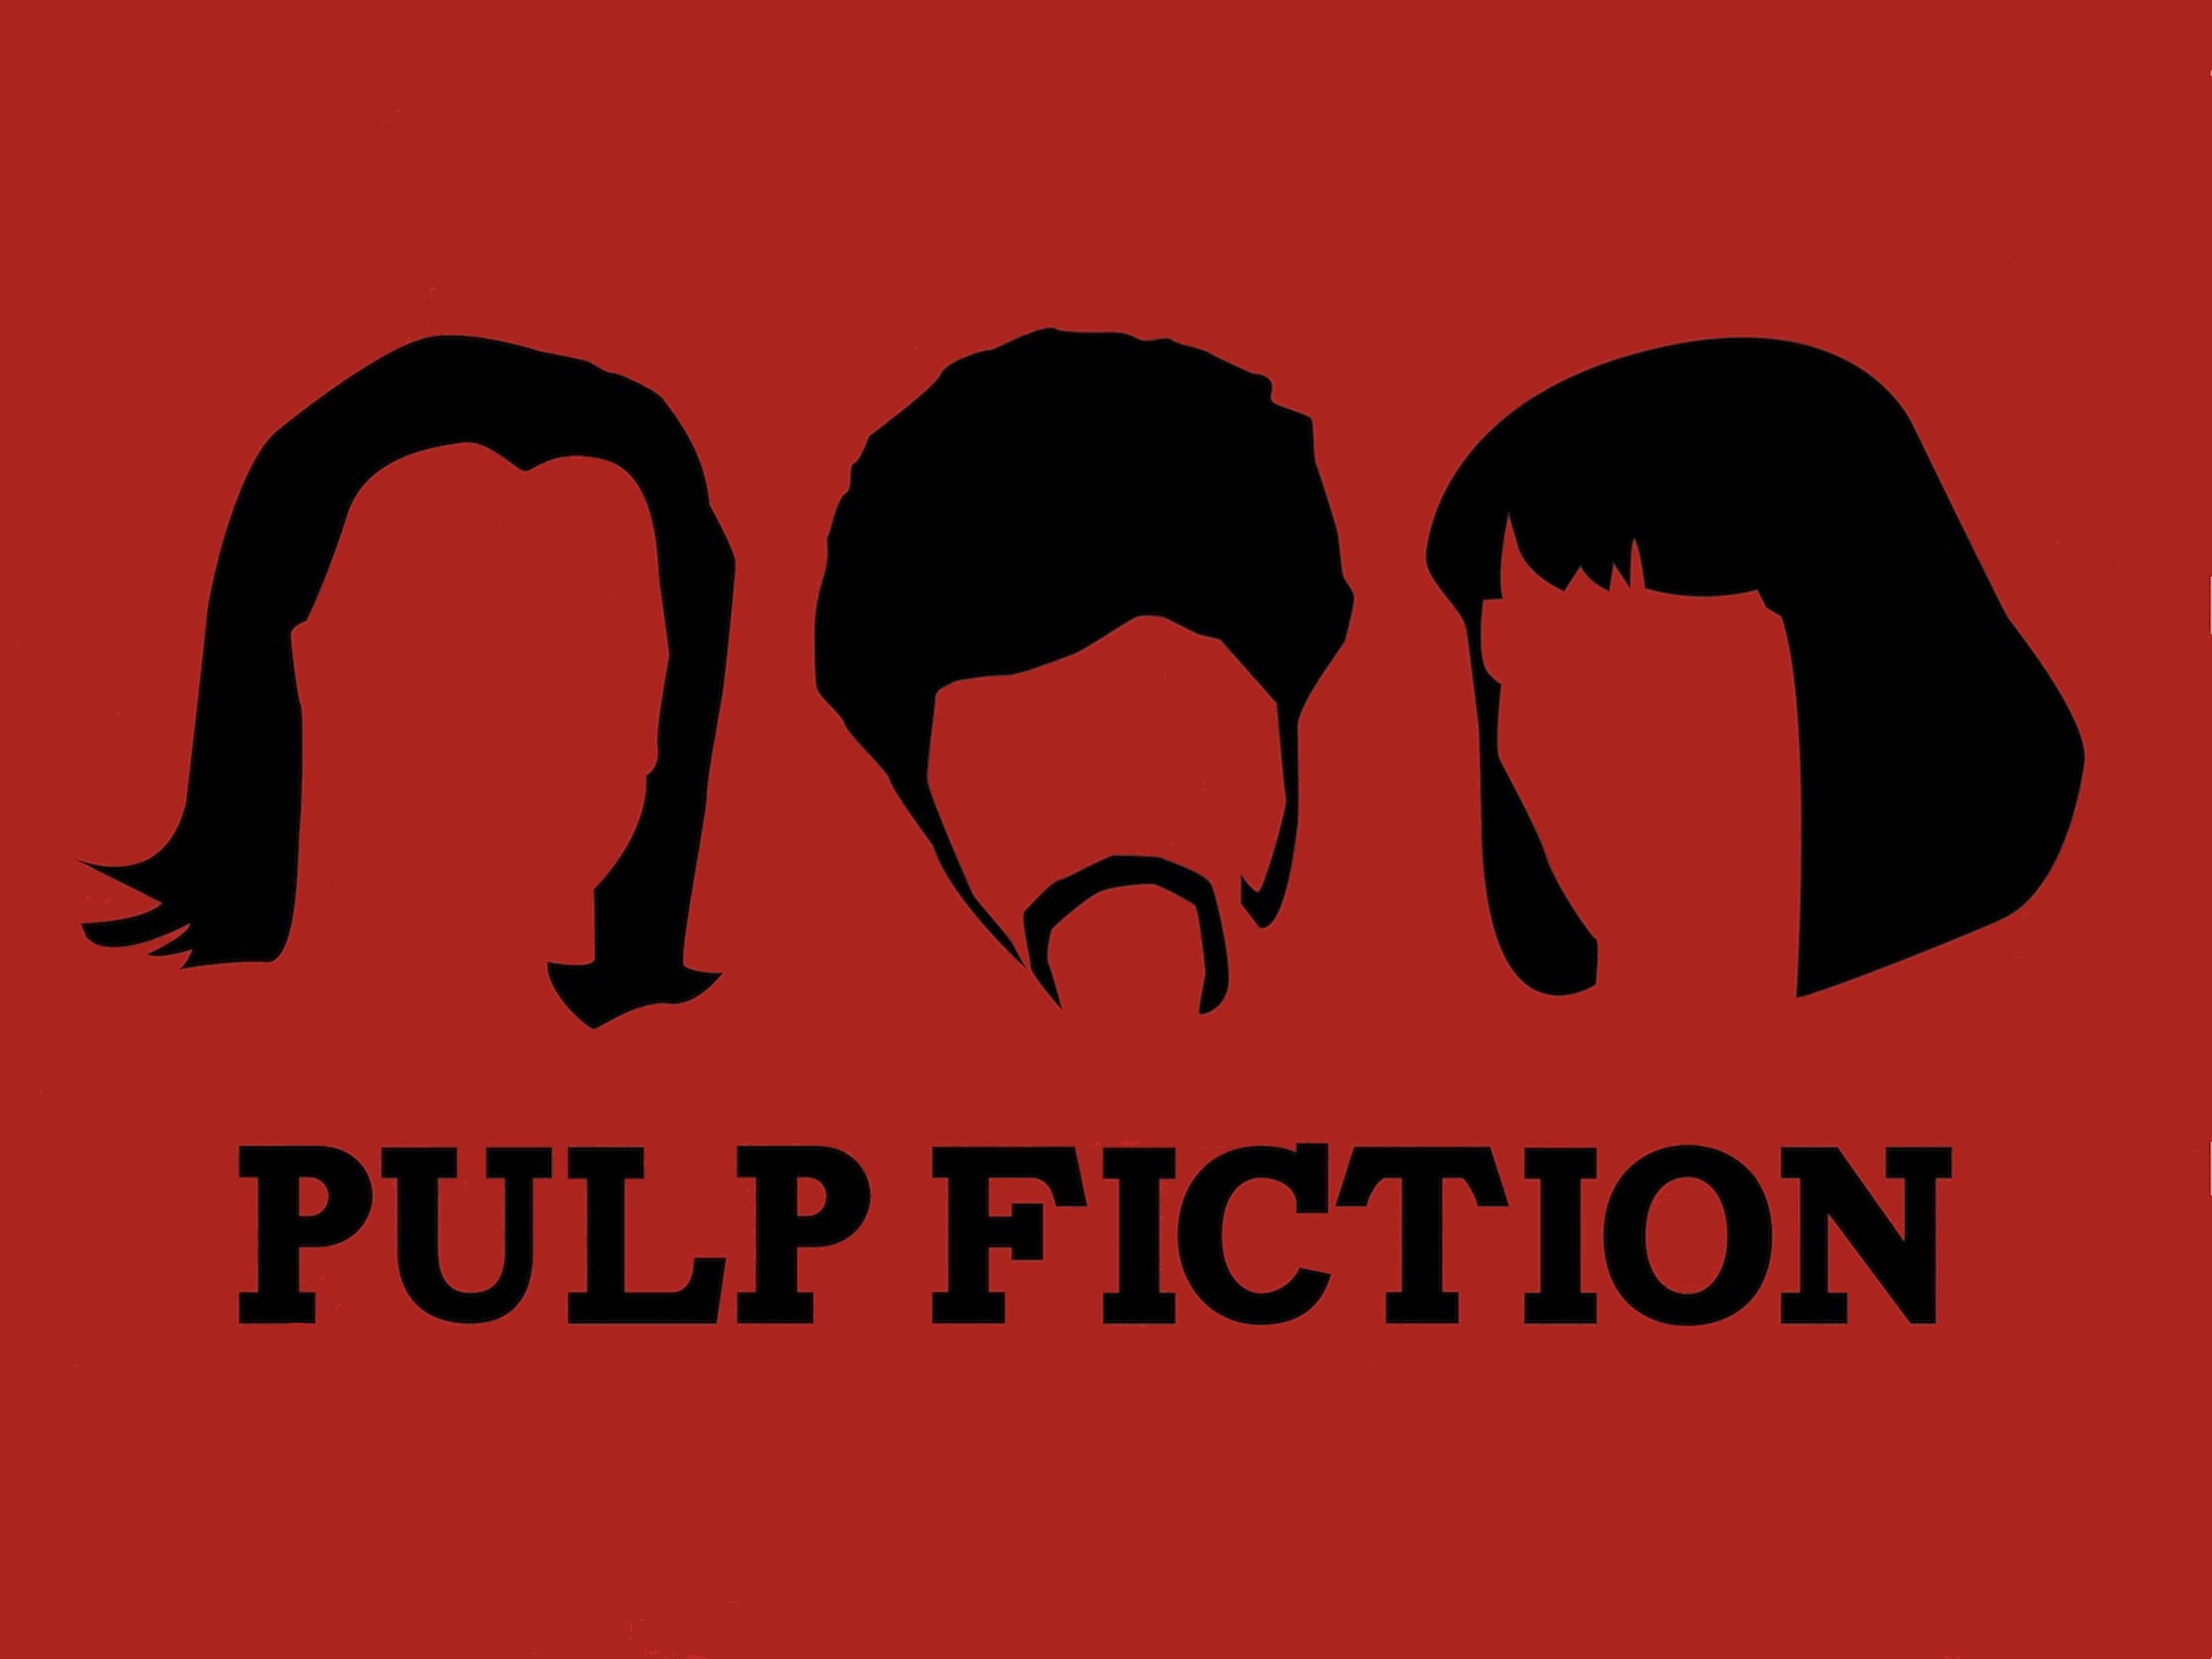 Pulp Fiction Computer Wallpapers, Desktop Backgrounds | 4800x3600 ...